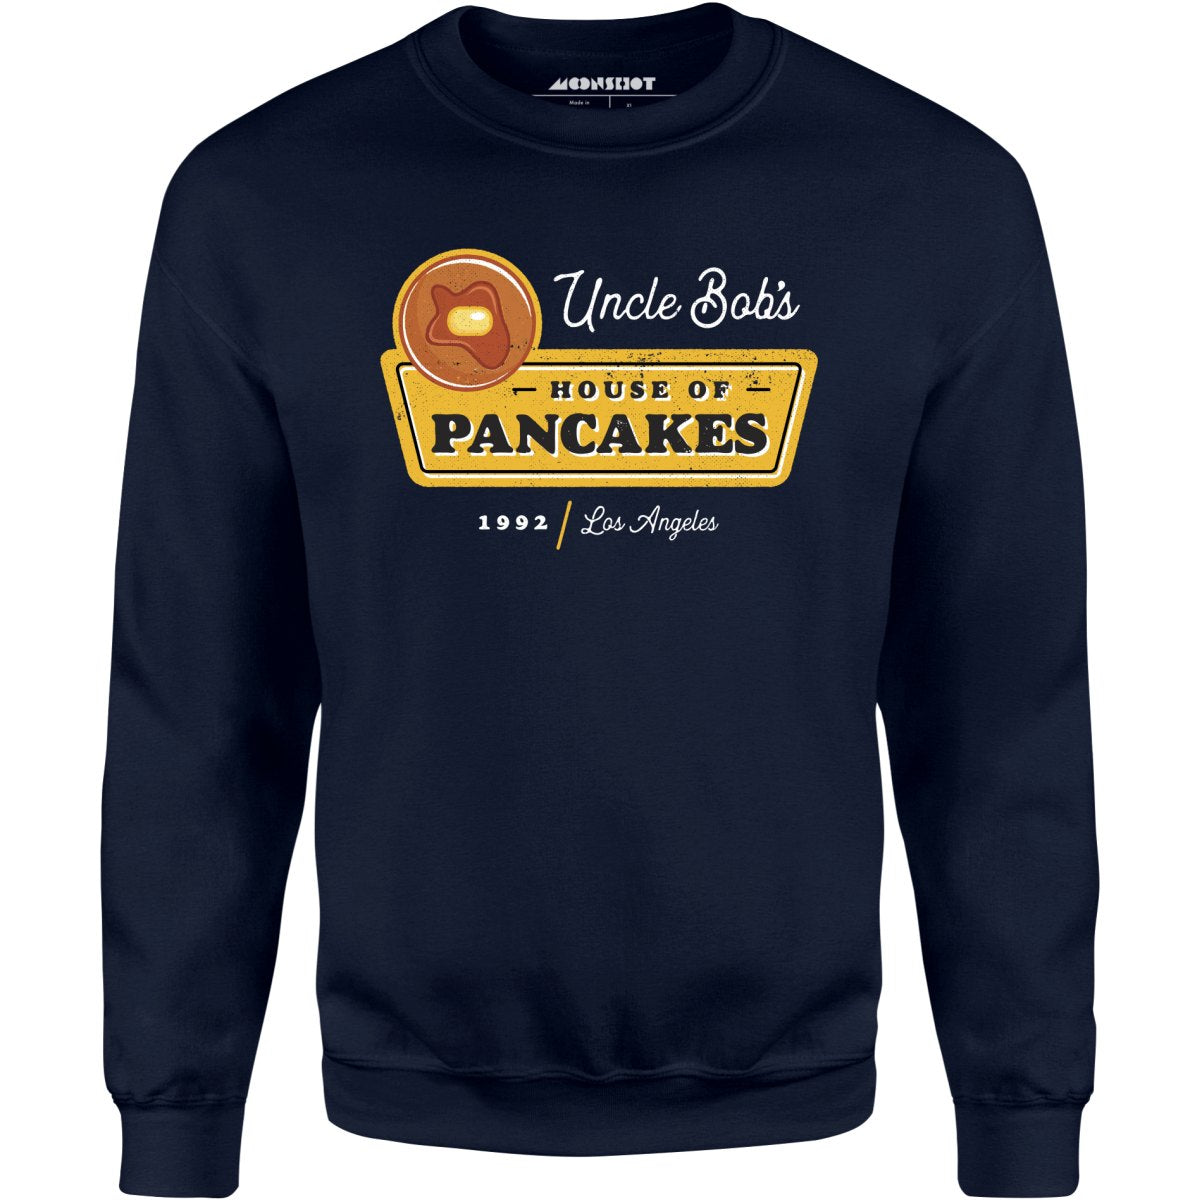 Uncle Bob's House of Pancakes - Reservoir Dogs - Unisex Sweatshirt